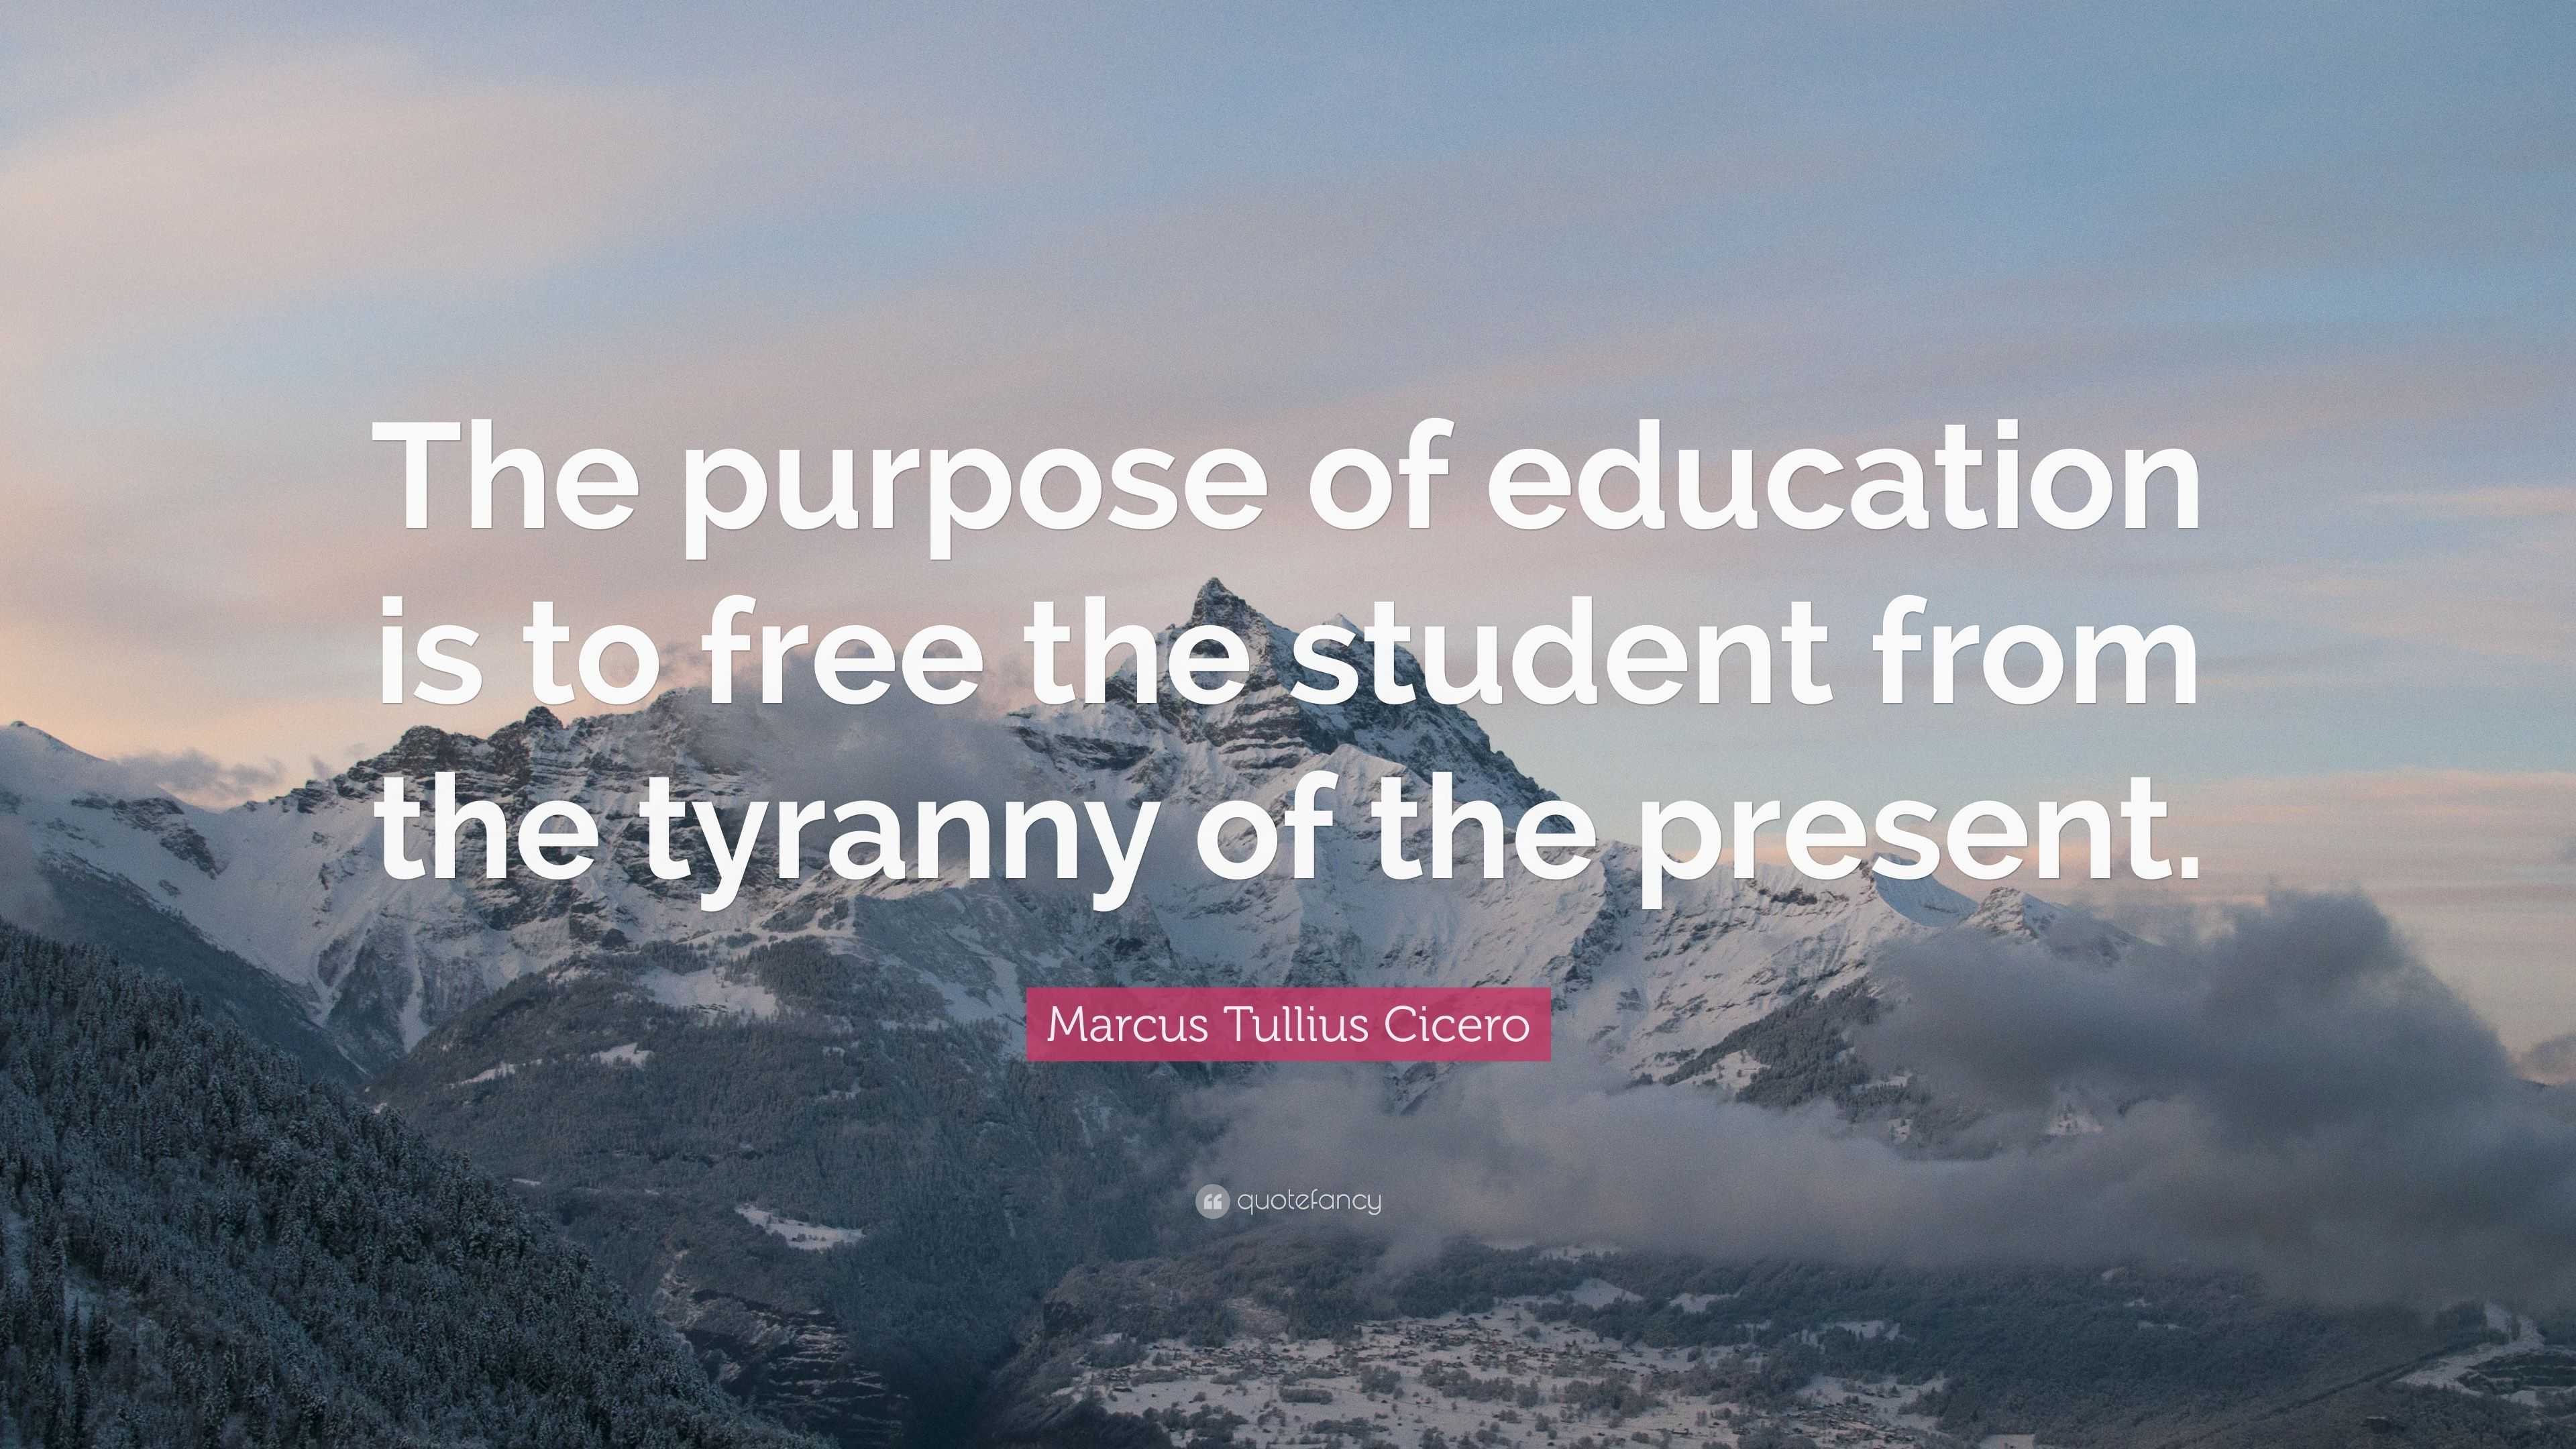 Marcus Tullius Cicero Quote: “The purpose of education is to free the ...